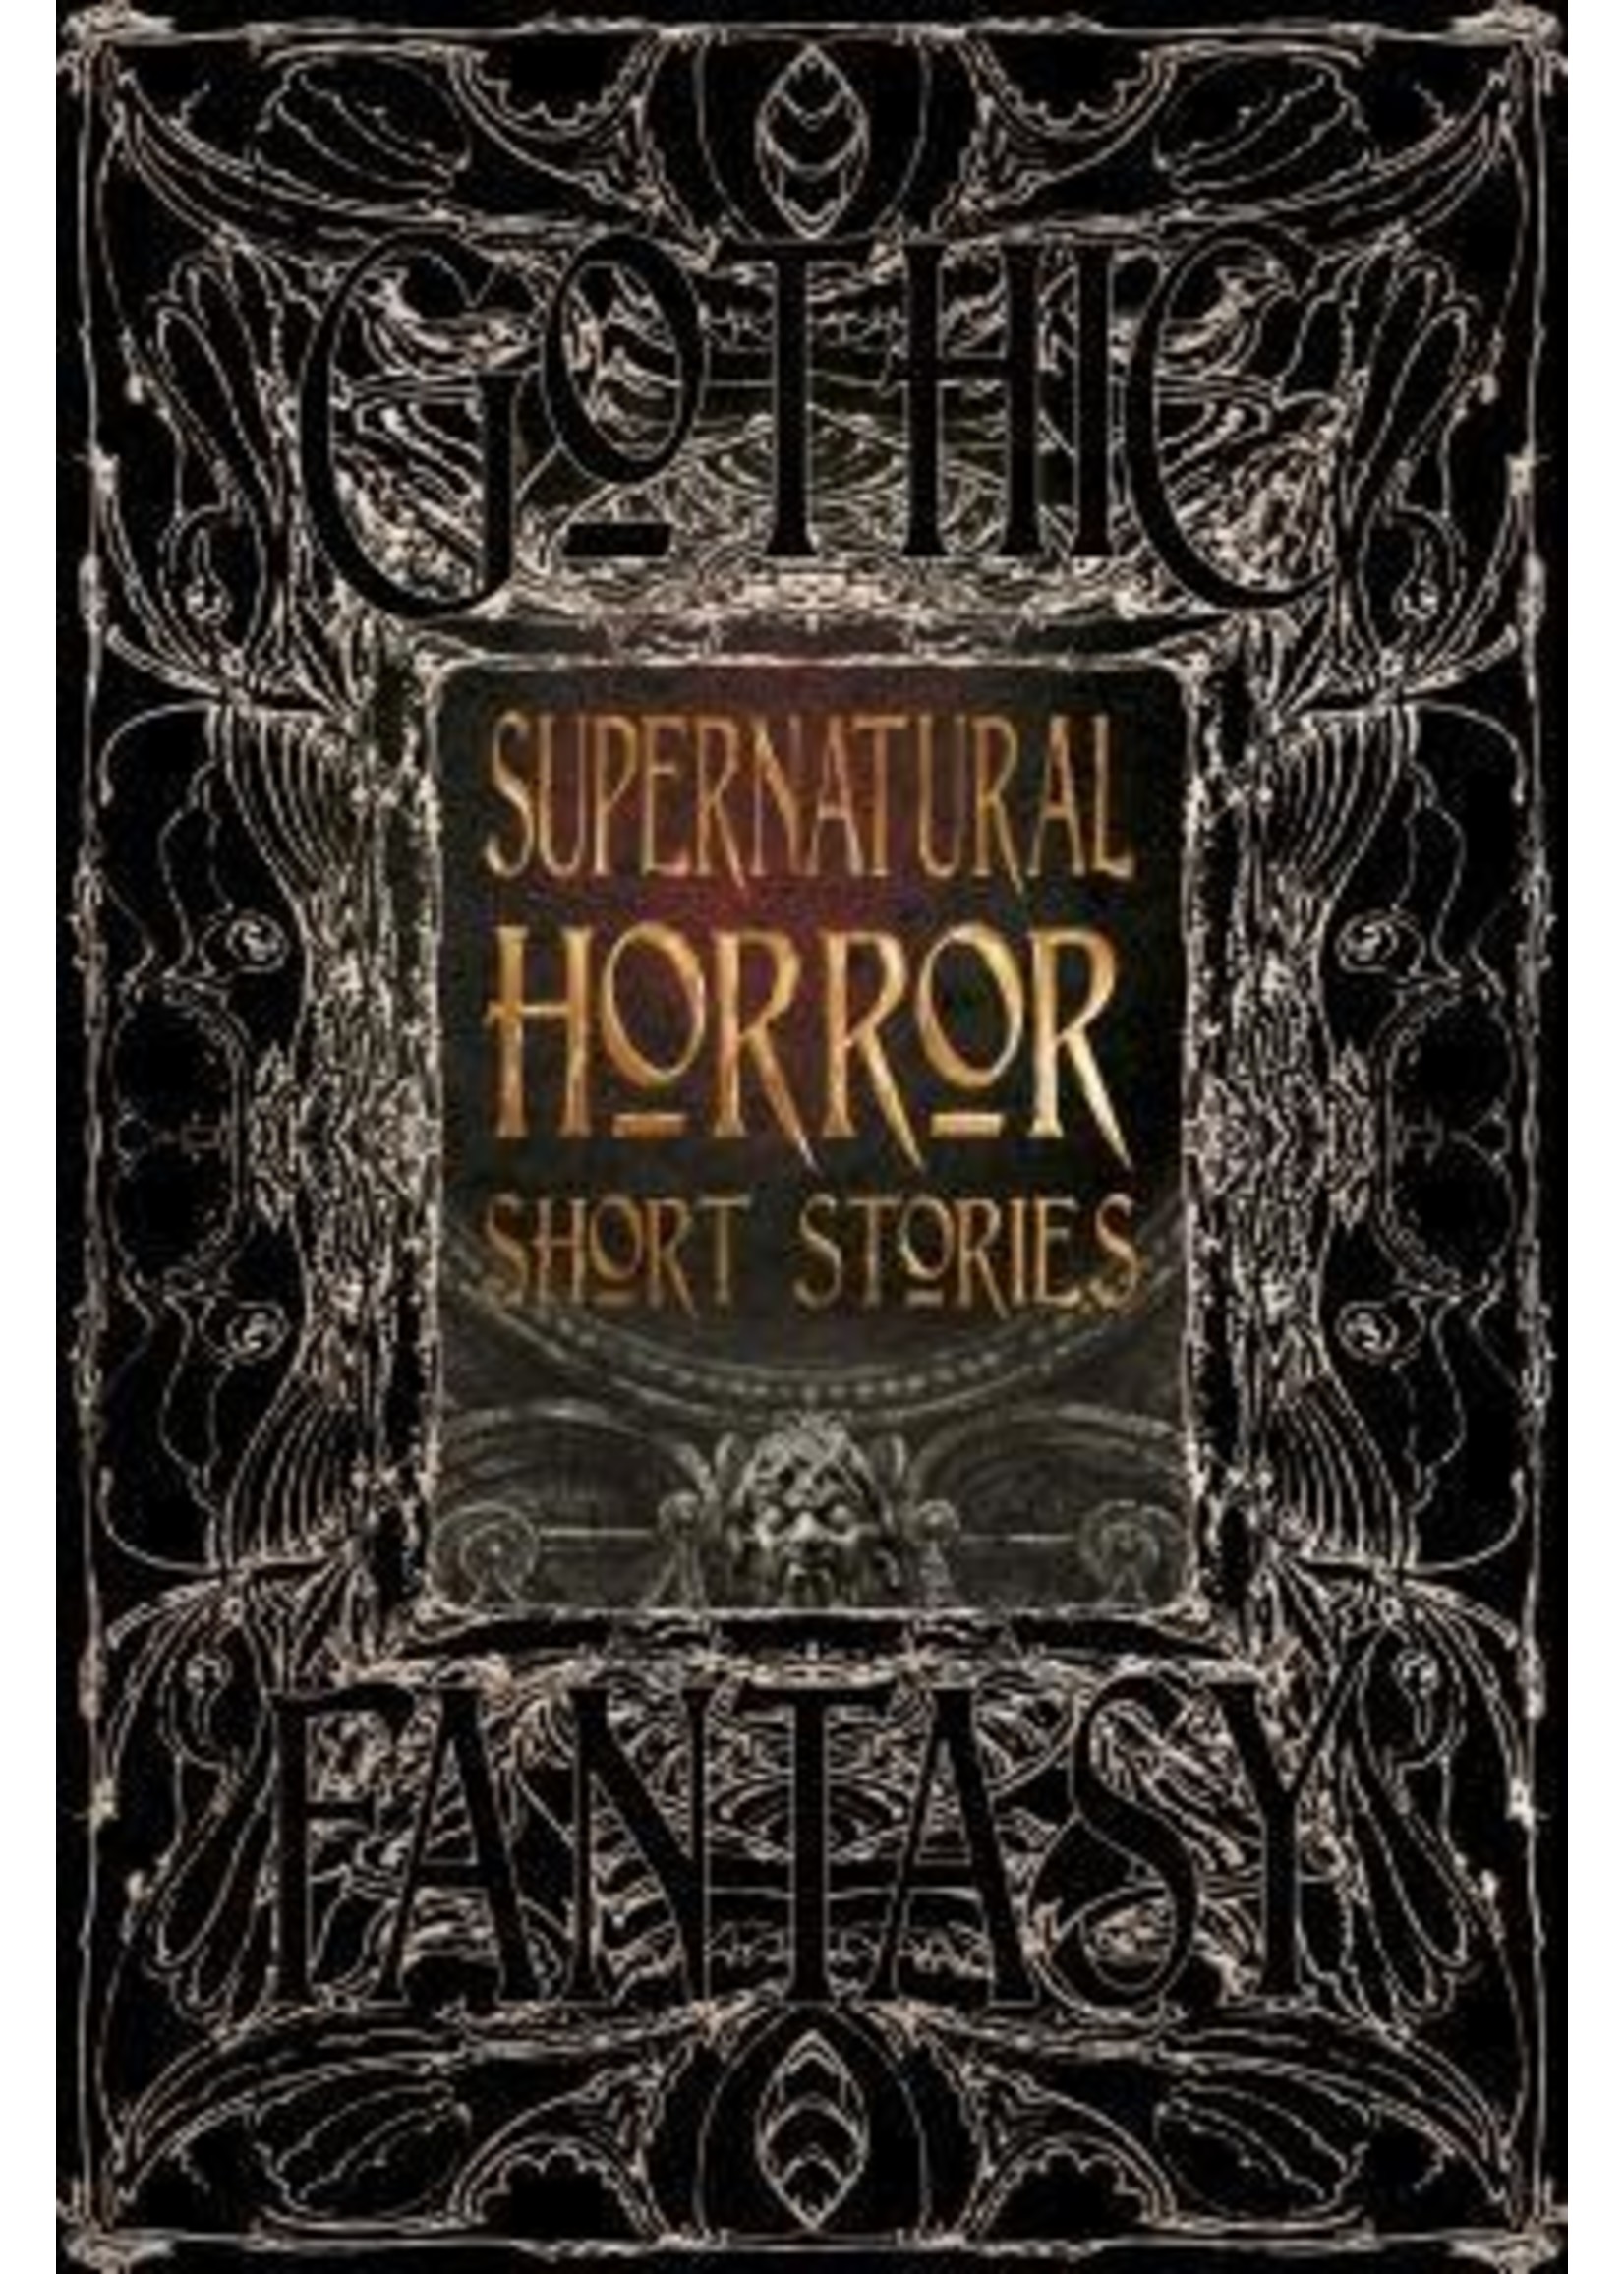 Supernatural Horror Short Stories by Flame Tree Studios